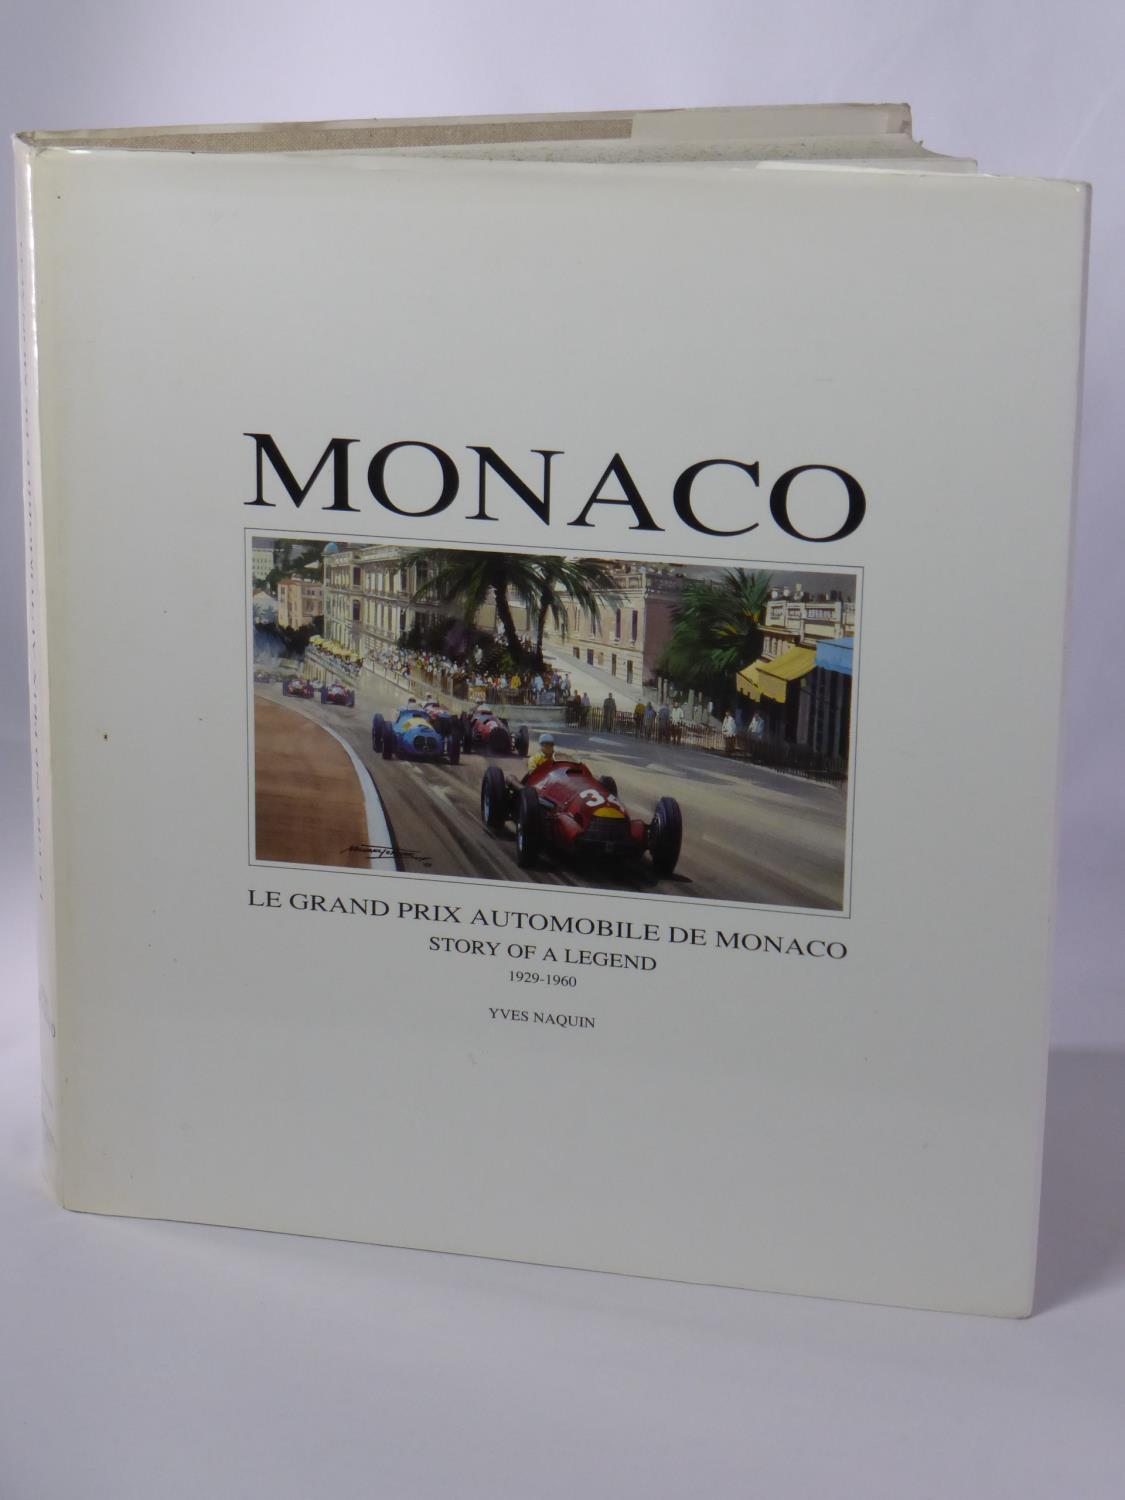 Le Grand Prix Automobile De Monaco 1929-1960 by Yves Naquin. 350pp, 1989, a 1st edition published by